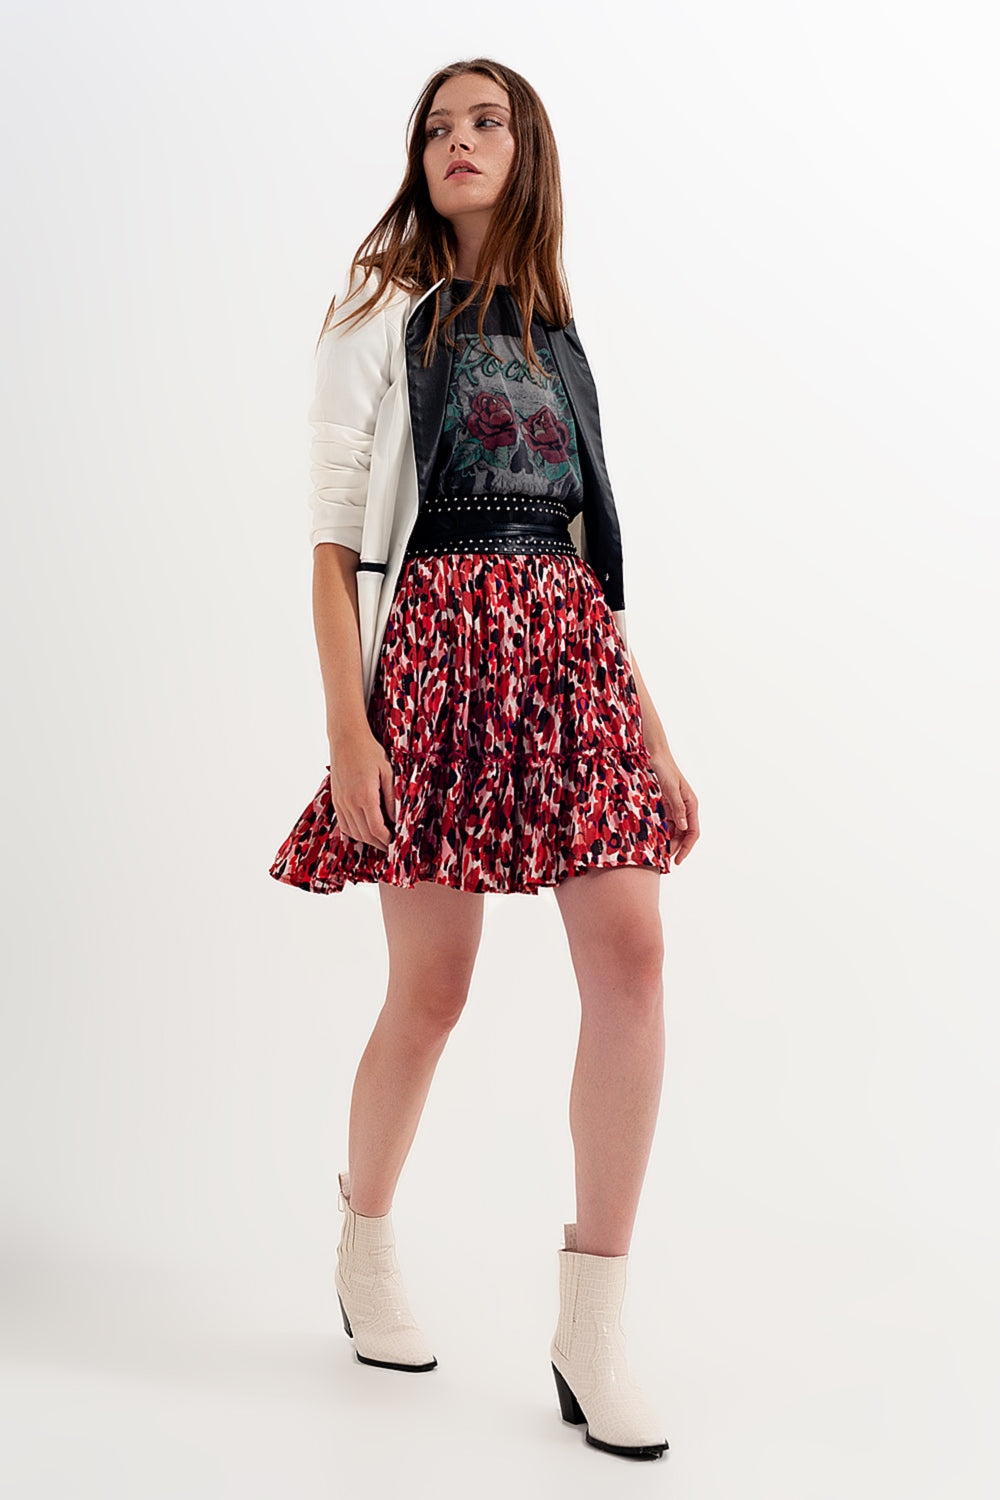 Ruffle mini skirt in animal print Szua Store